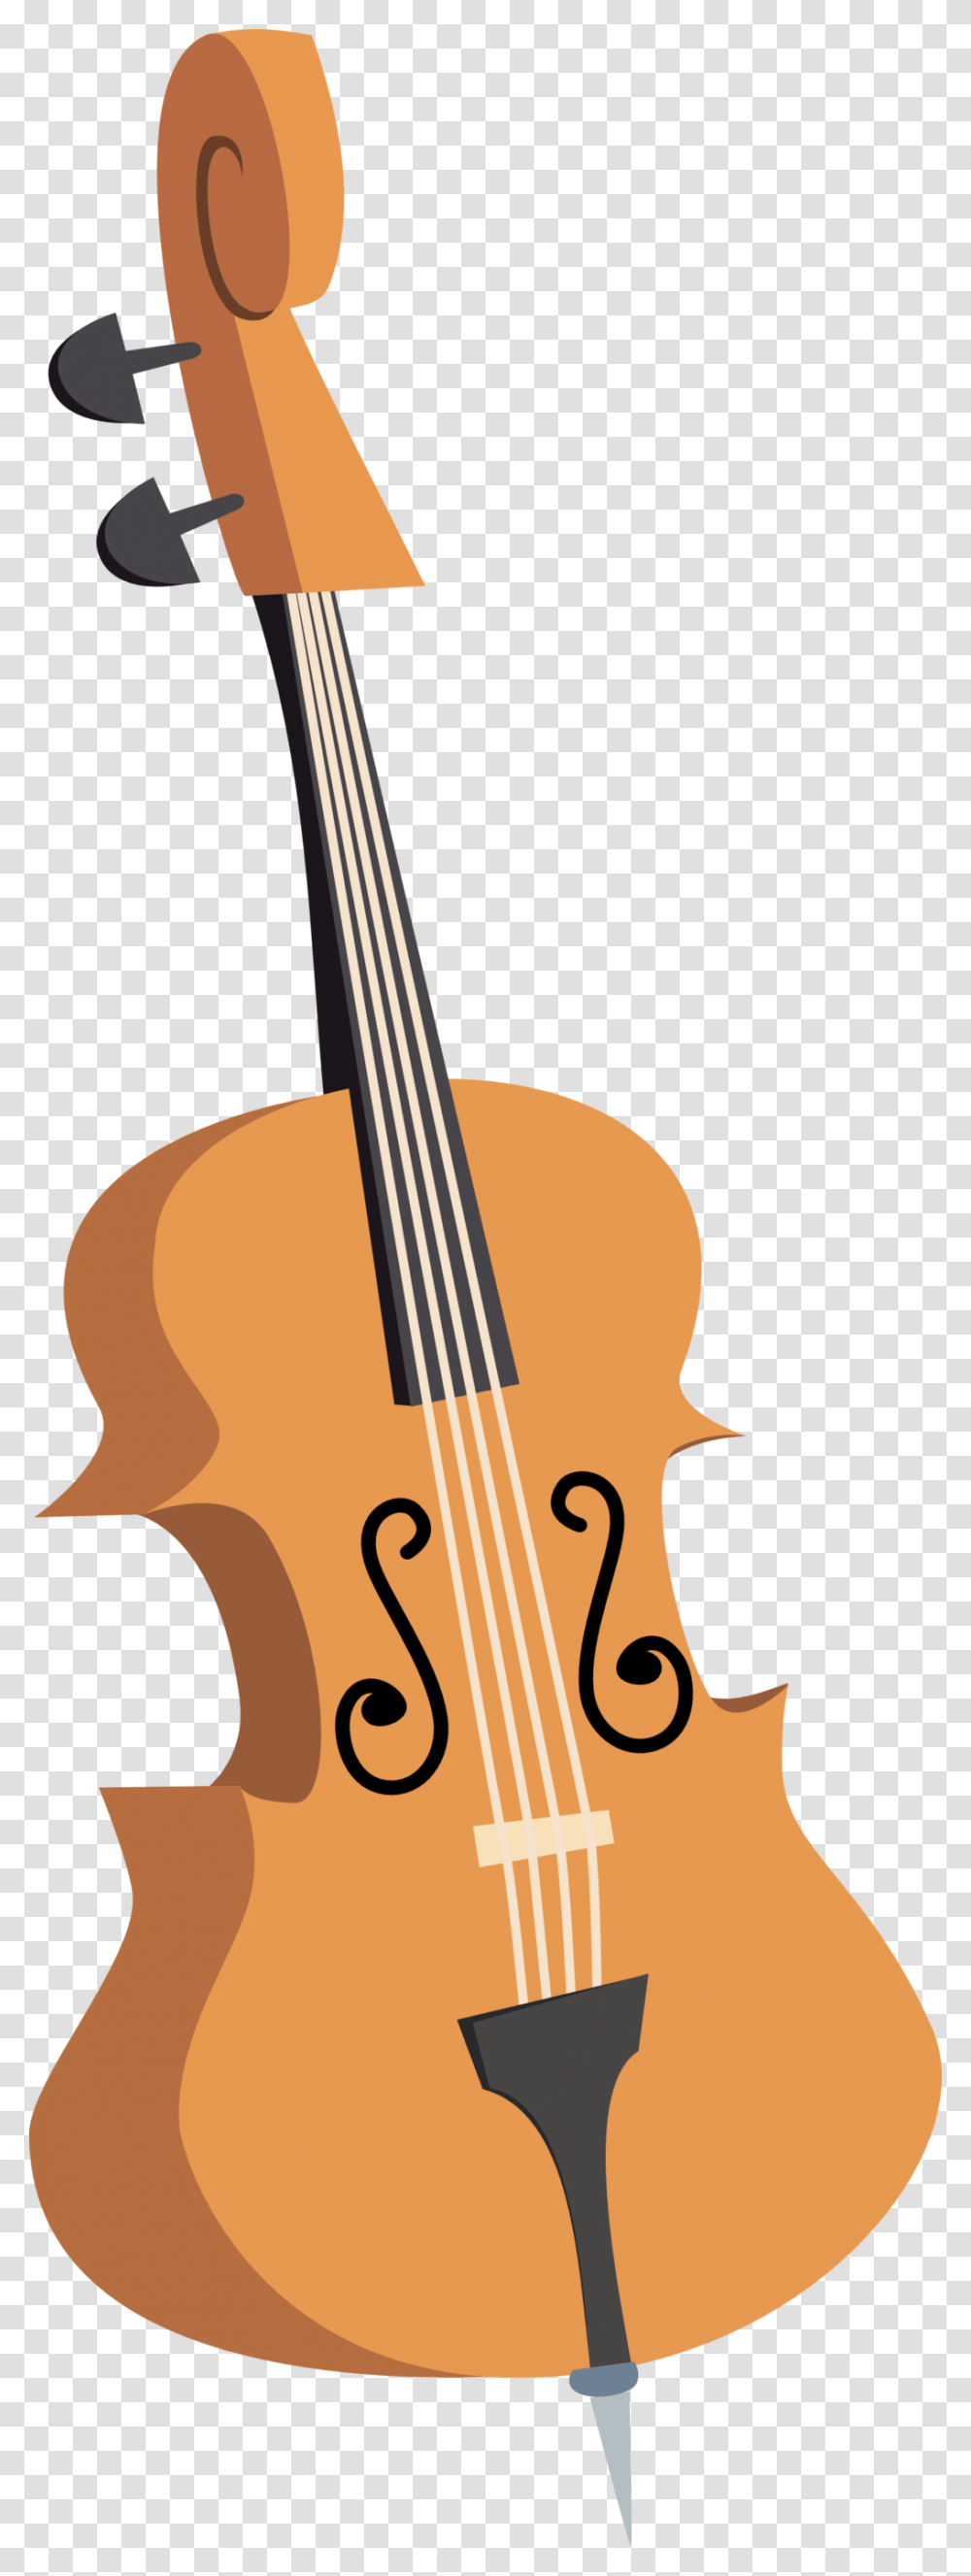 Cello Vector Clipart Royalty Free Download Oktaviya Mlp, Musical Instrument, Leisure Activities, Violin, Viola Transparent Png